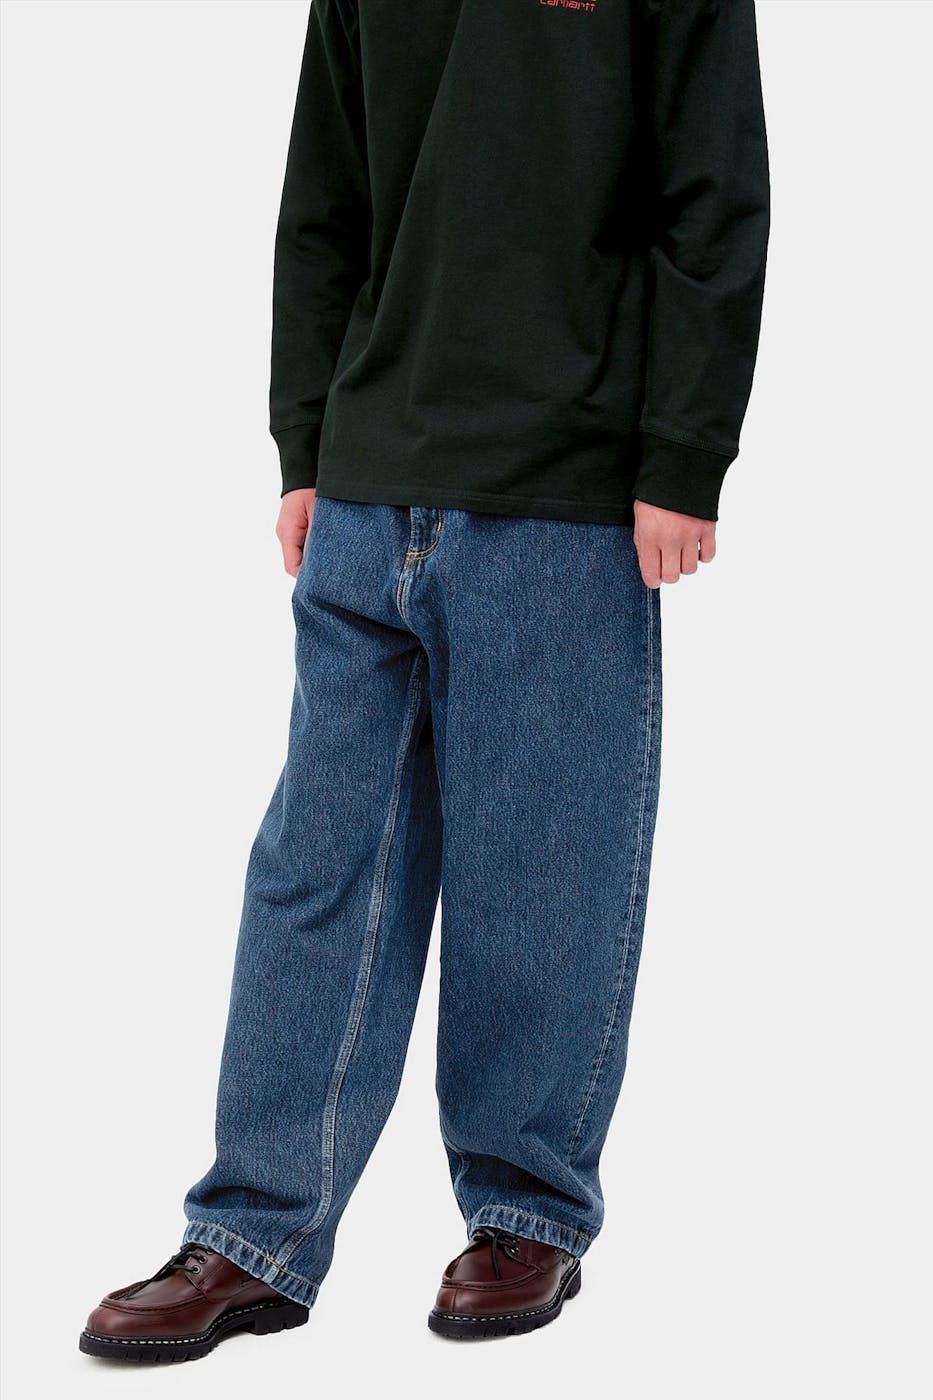 Carhartt WIP - Blauwe Brandon jeans